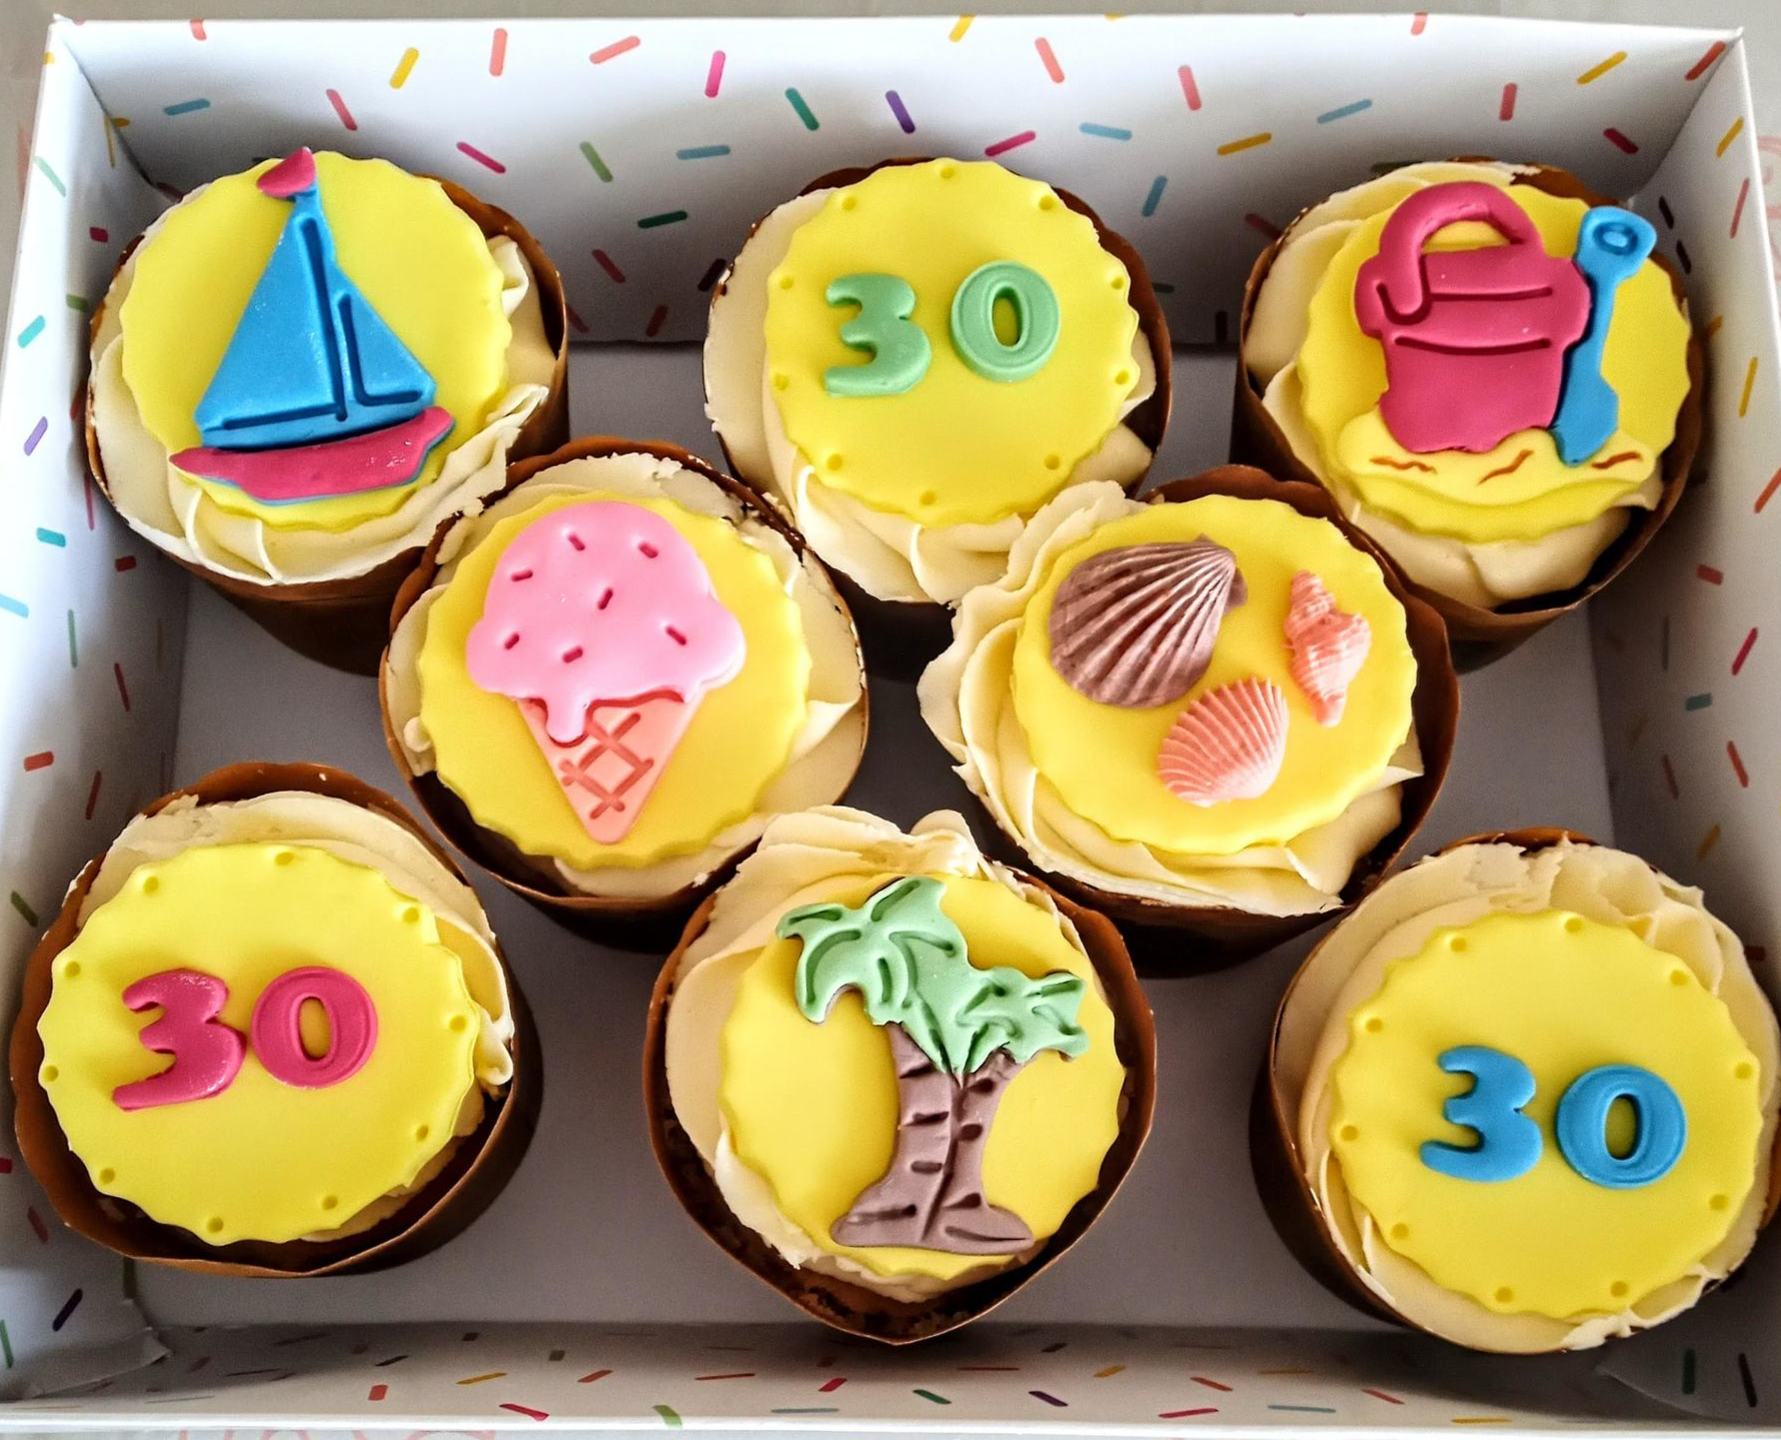 "Beach/seaside" themed cupcakes